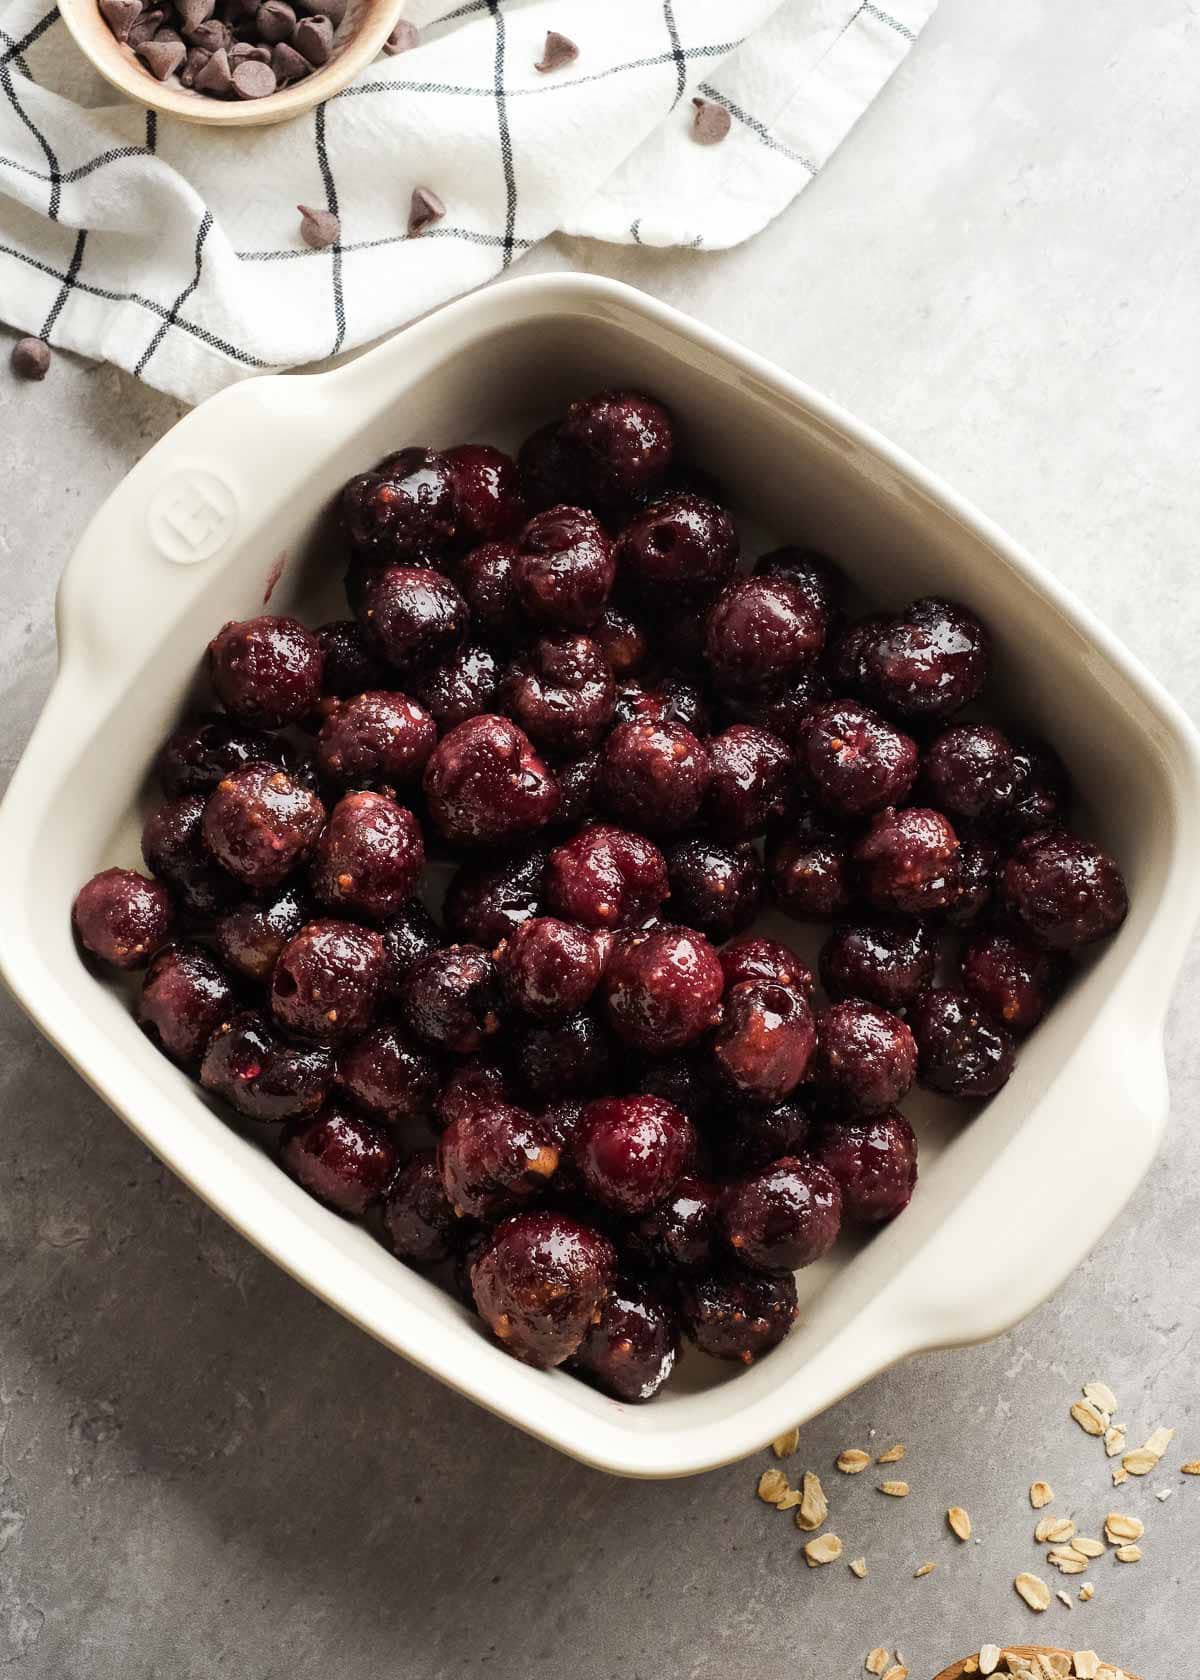 cherrys in a baking dish